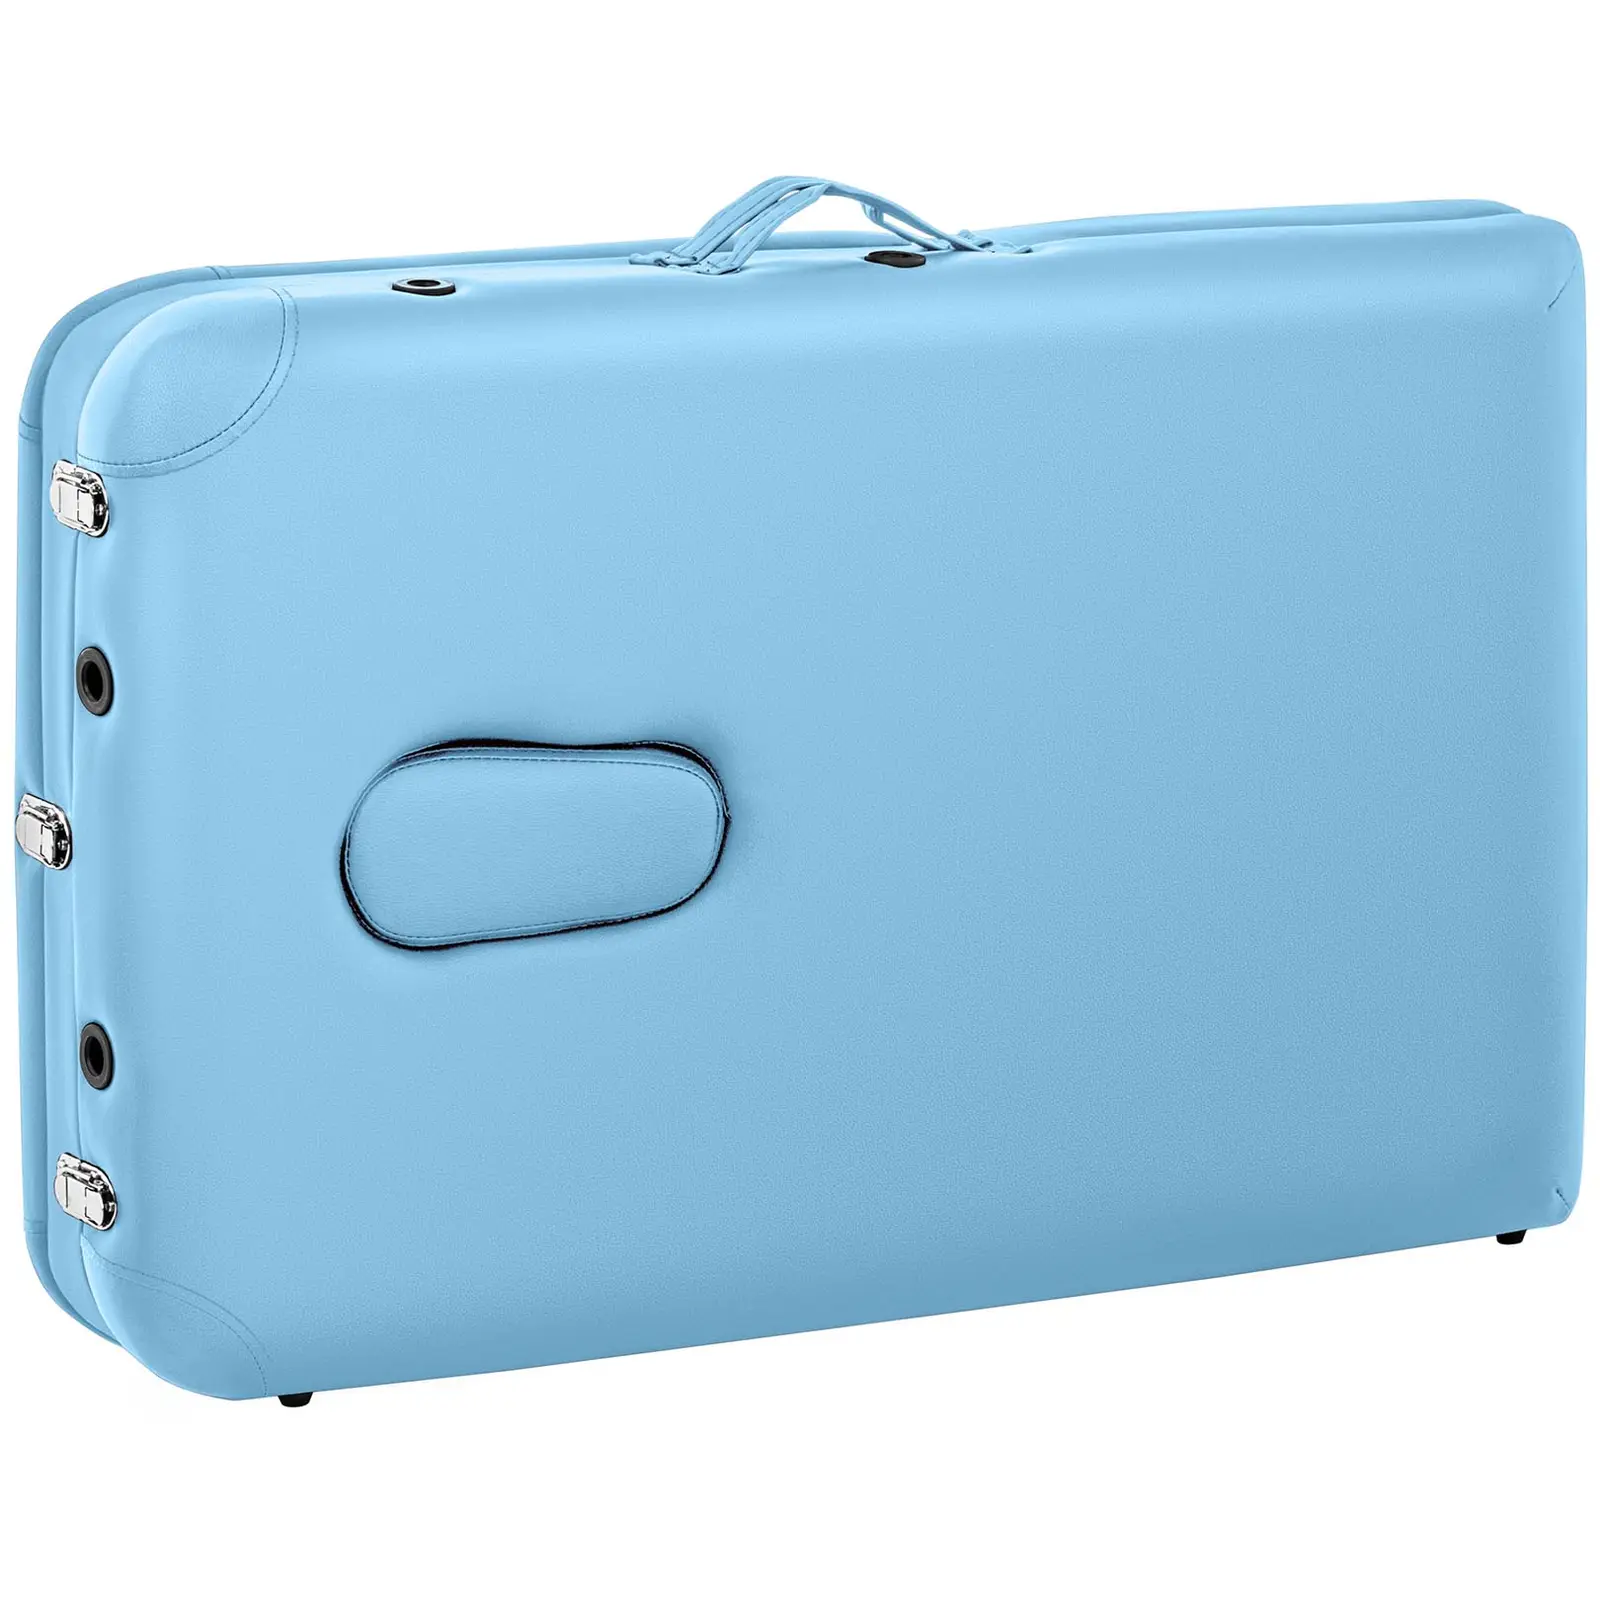 Lettino massaggio portatile - 185 x 60 x 60-81 cm - 180 kg - Turquoise